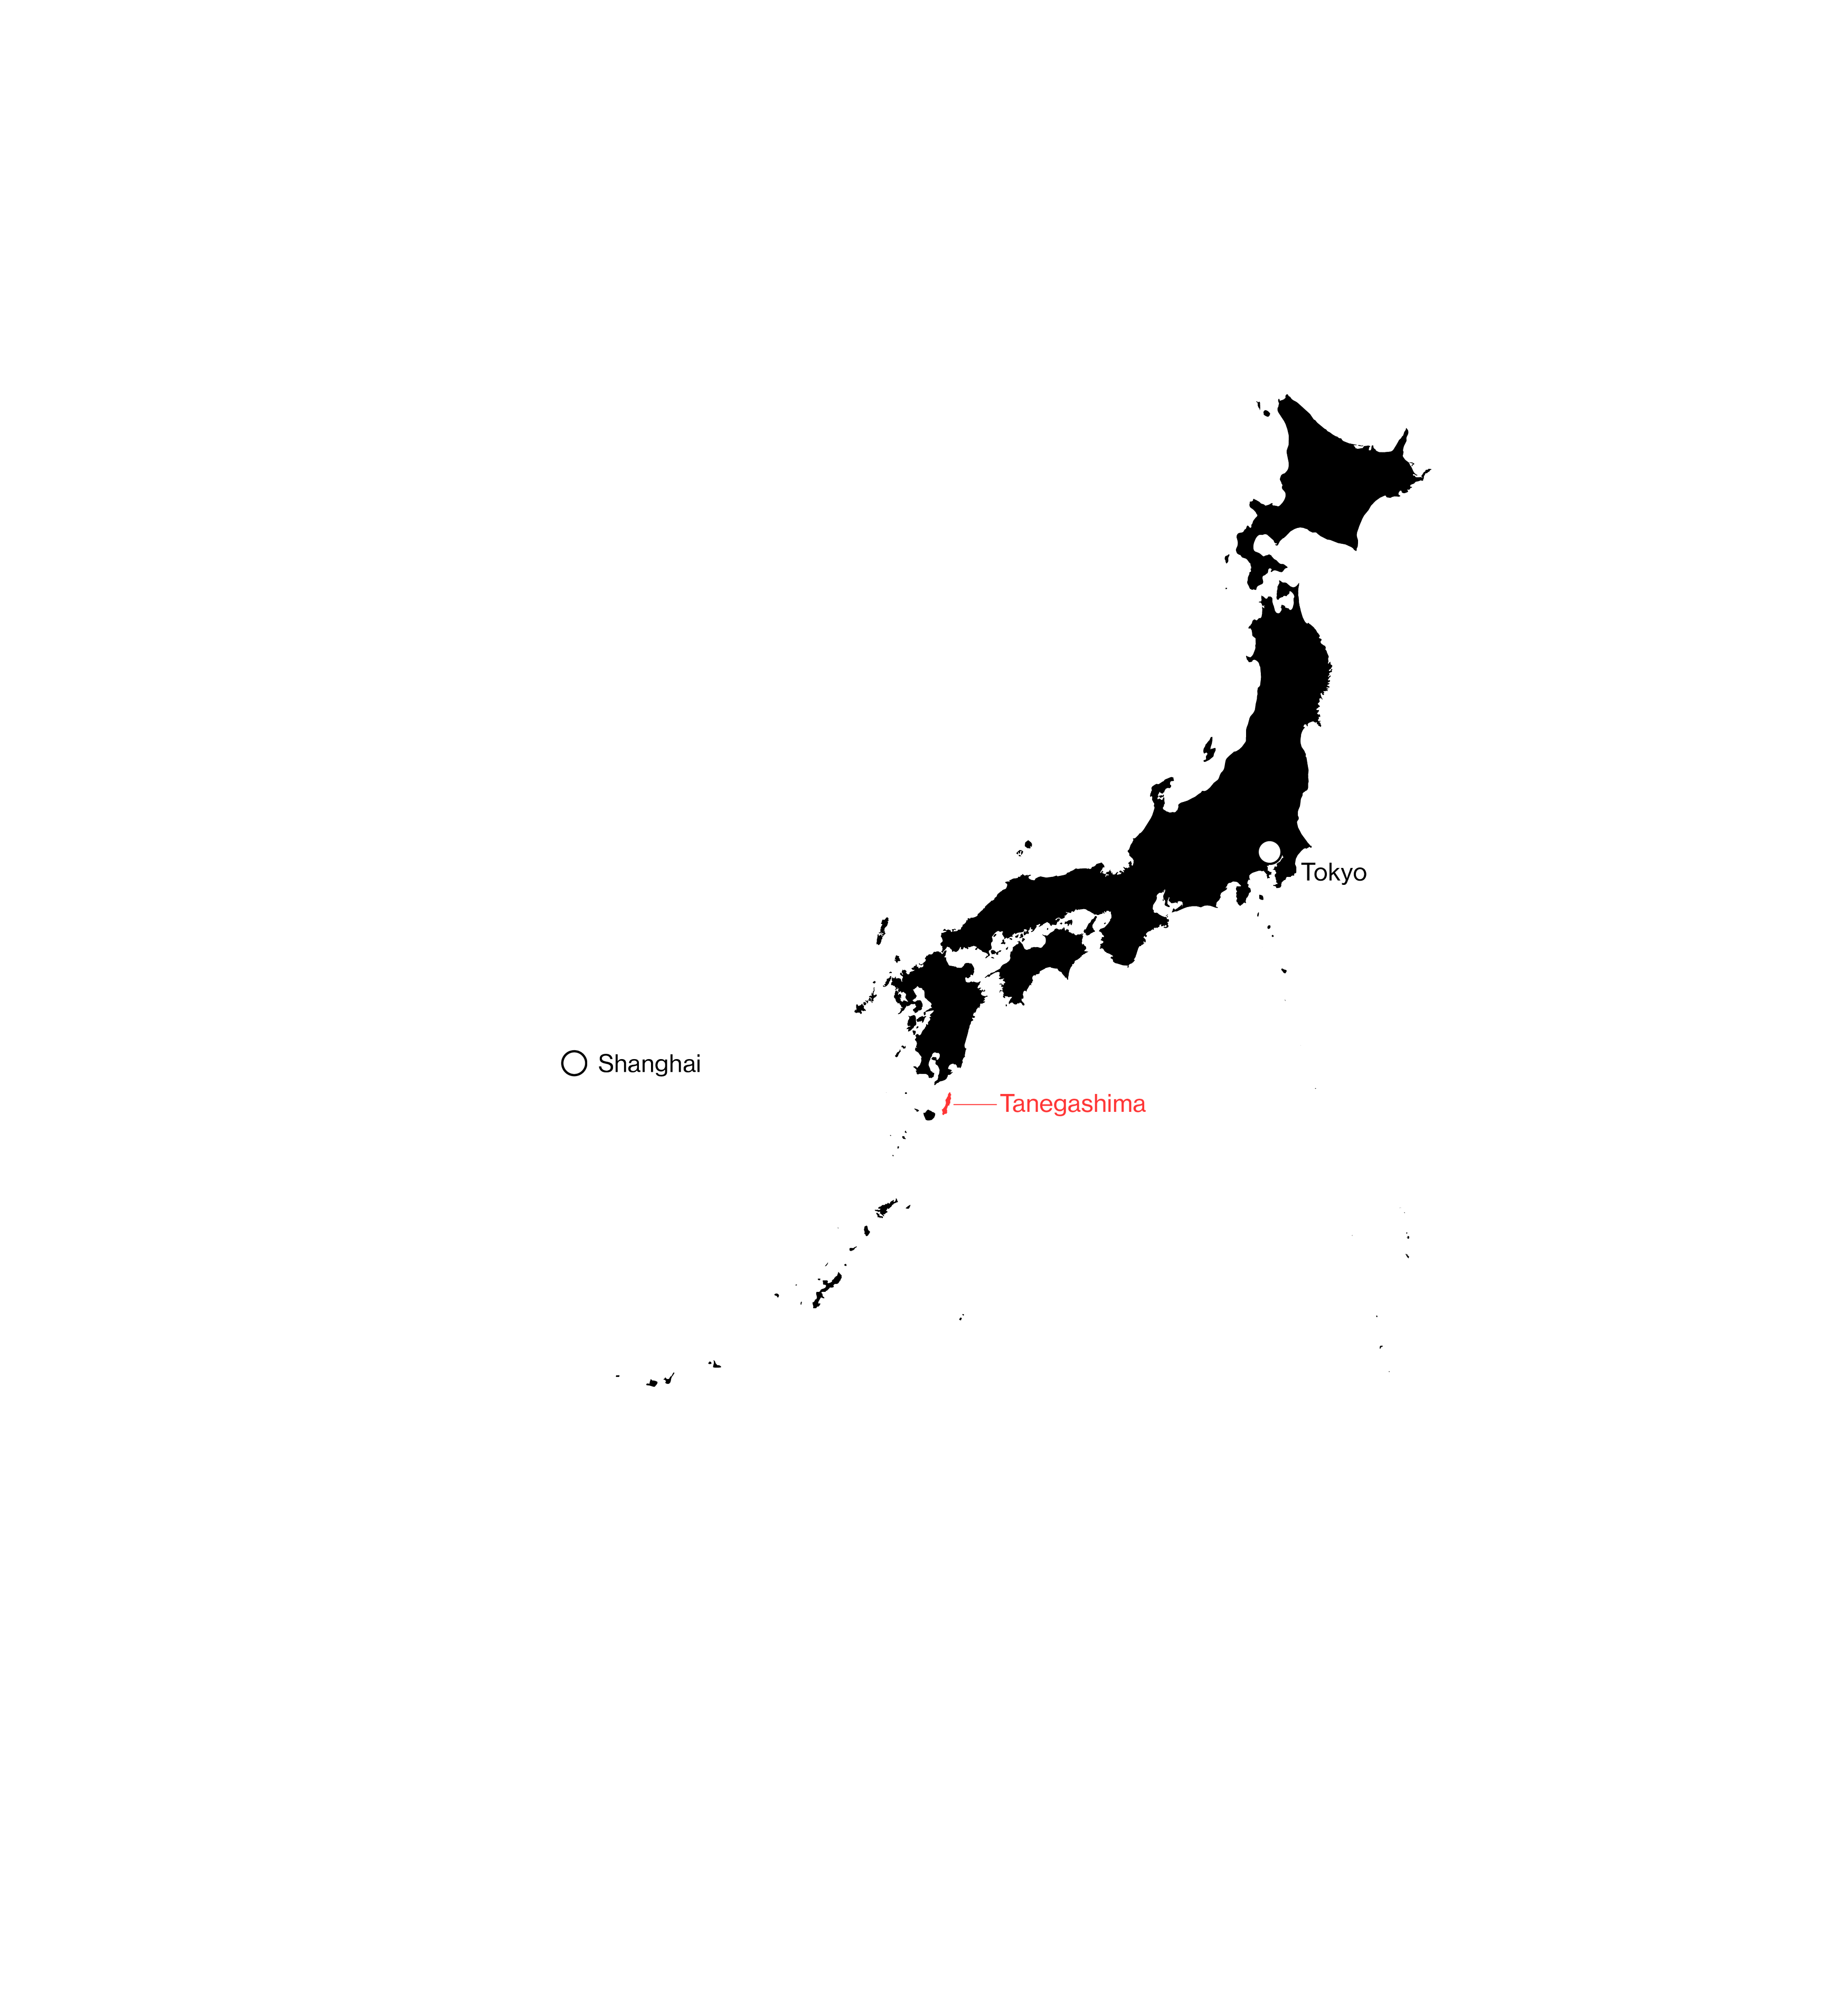 Map showing the Japanese island of Tanegashima, in proximity to Shanghai, China.